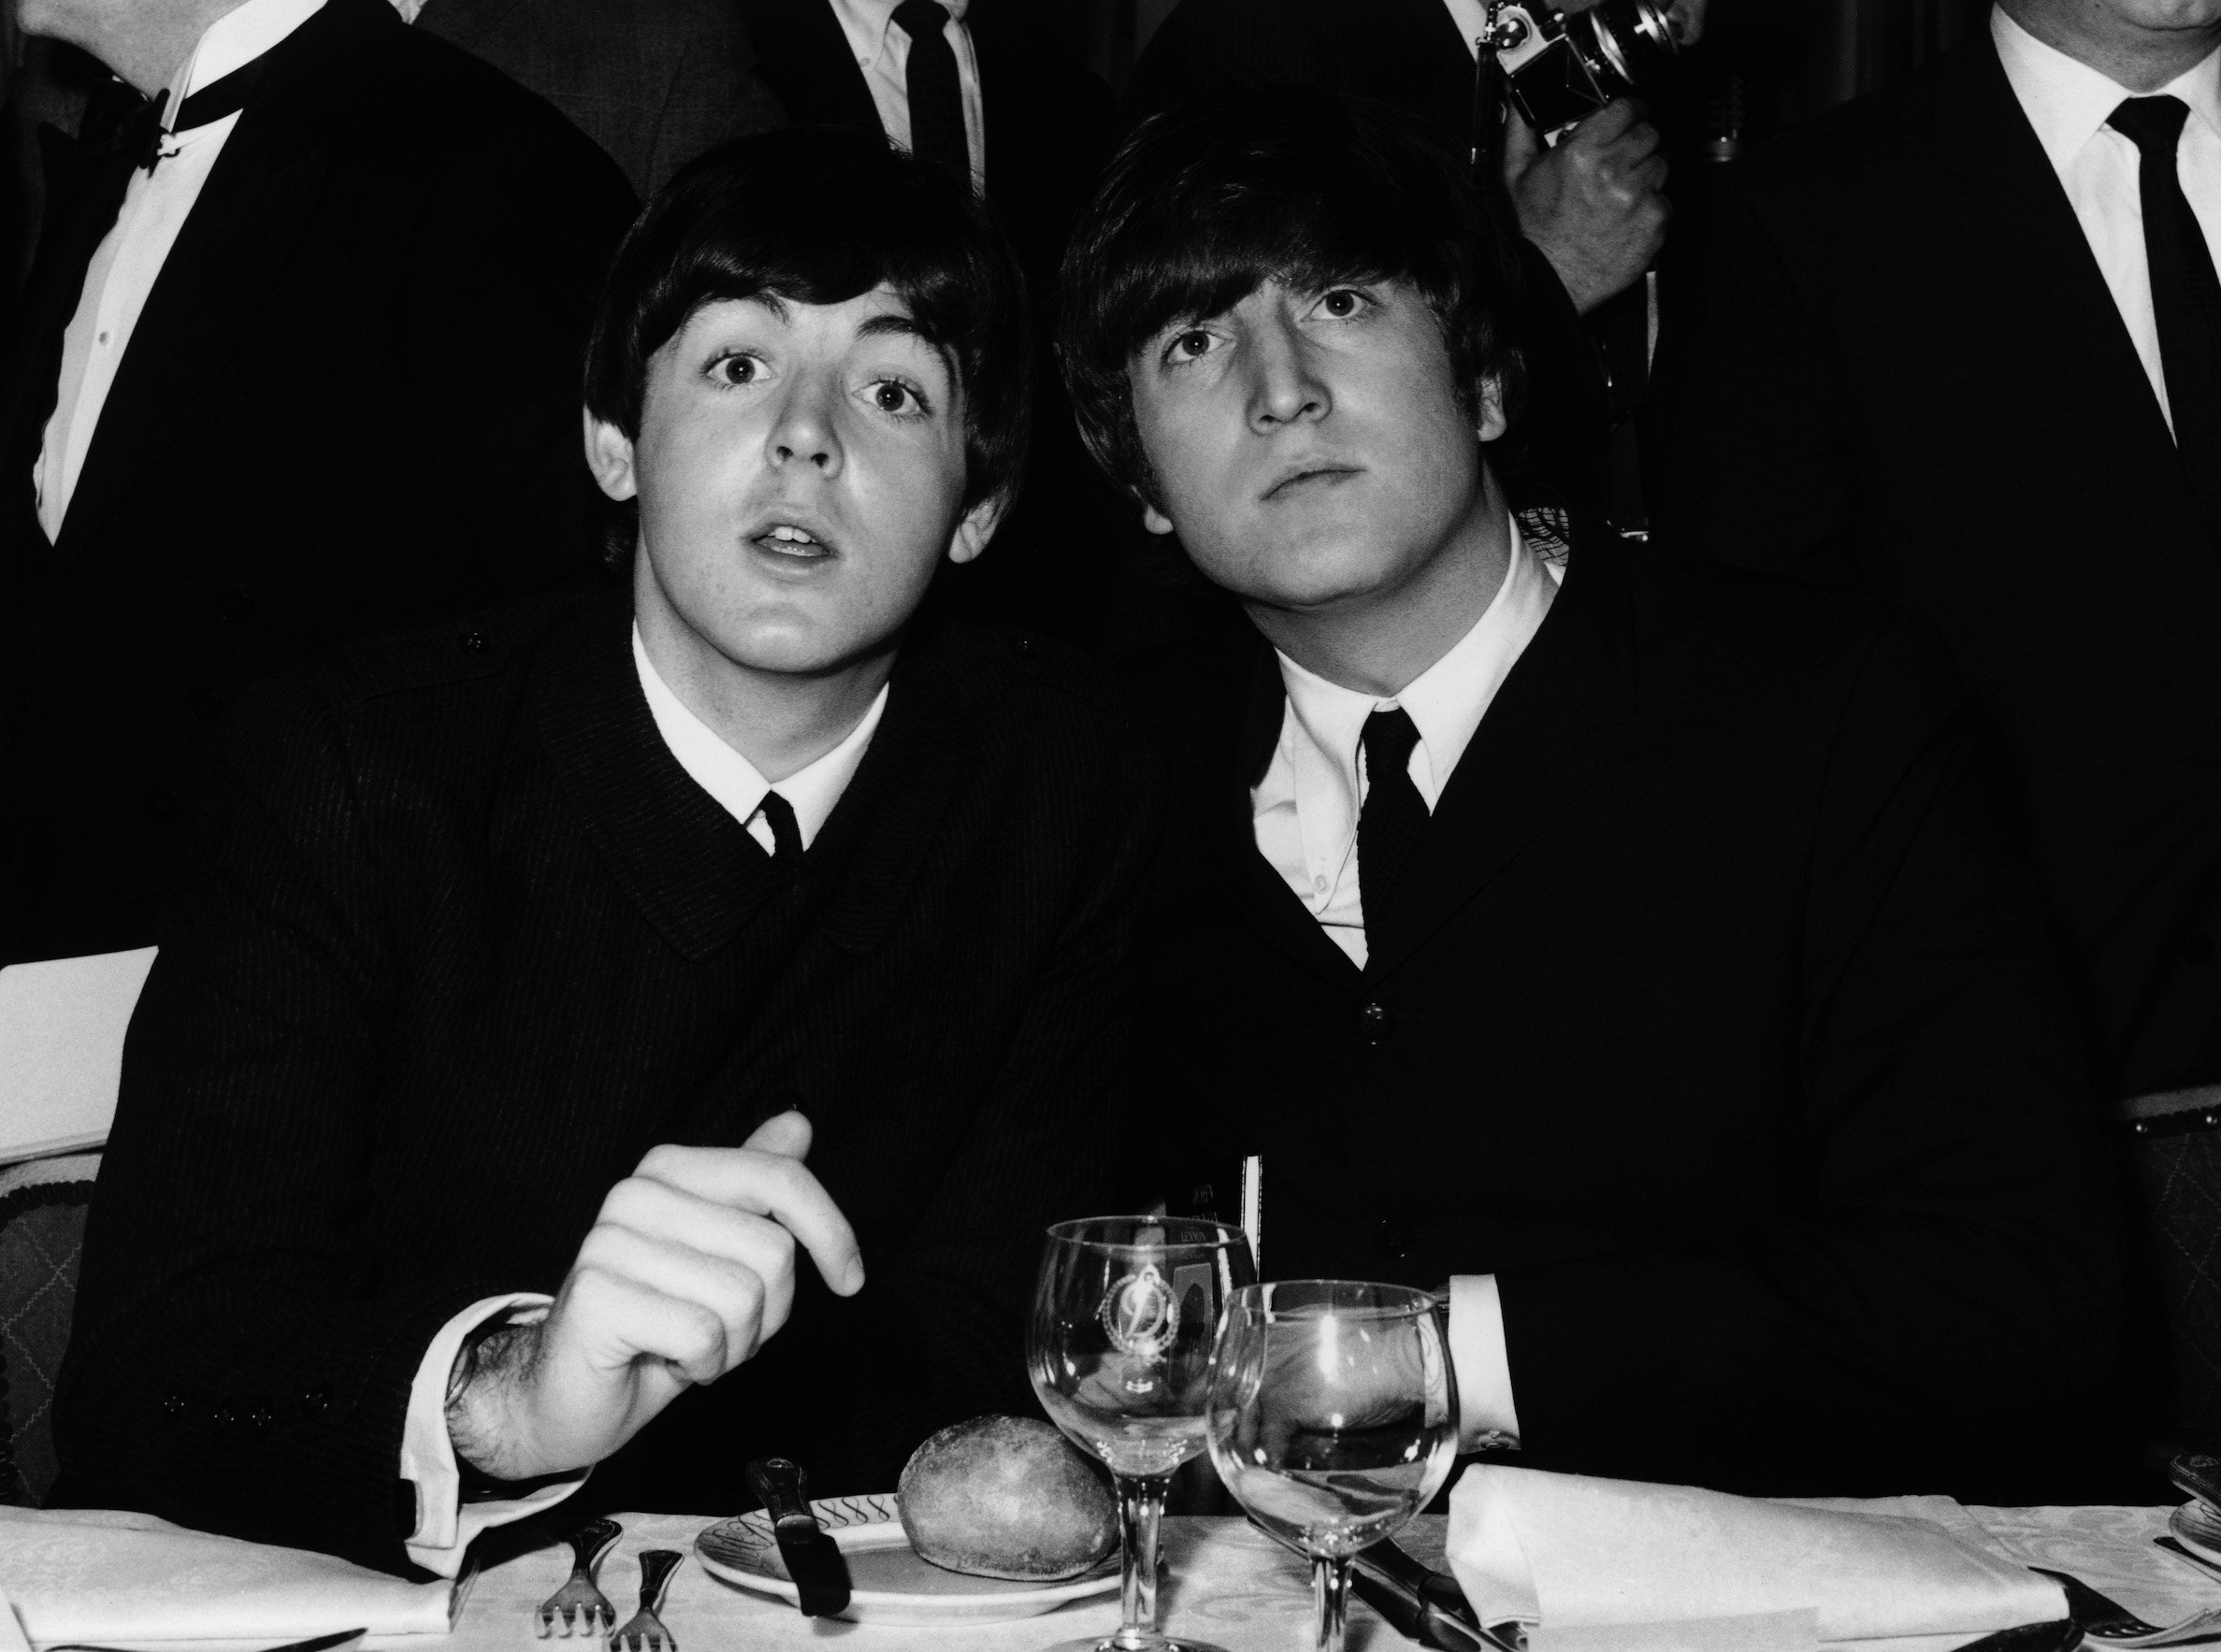 Paul McCartney and John Lennon at the Varity Club Showbusiness Awards in Dorchester, London